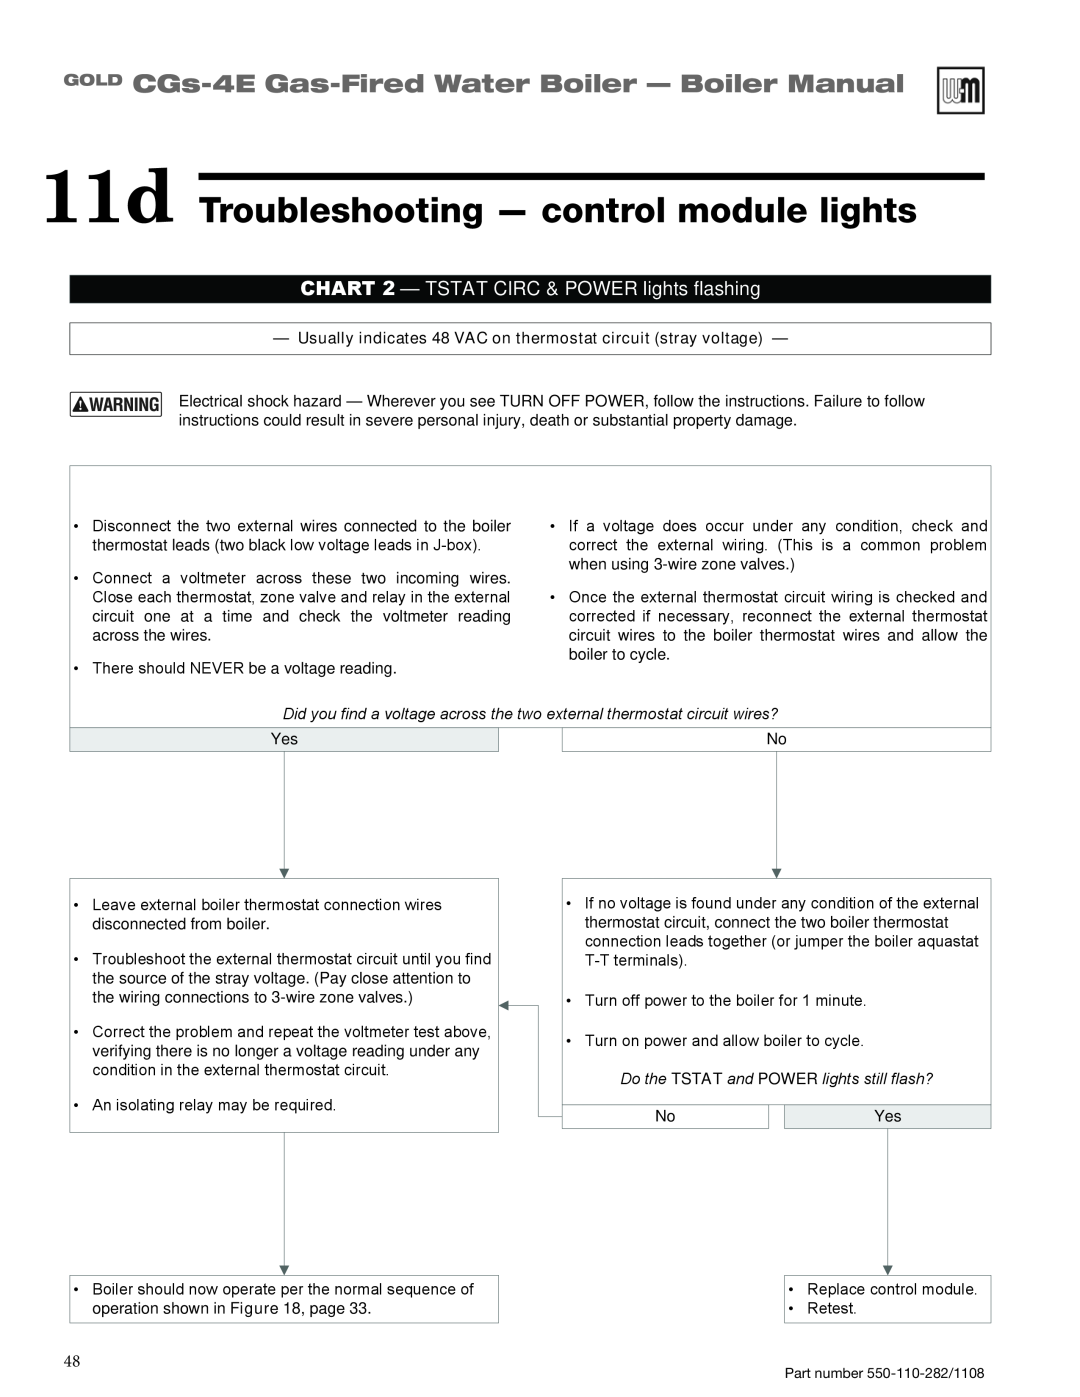 Weil-McLain CGS-4E manual 11d Troubleshooting - control module lights, GOLD CGs-4E Gas-FiredWater Boiler - Boiler Manual 